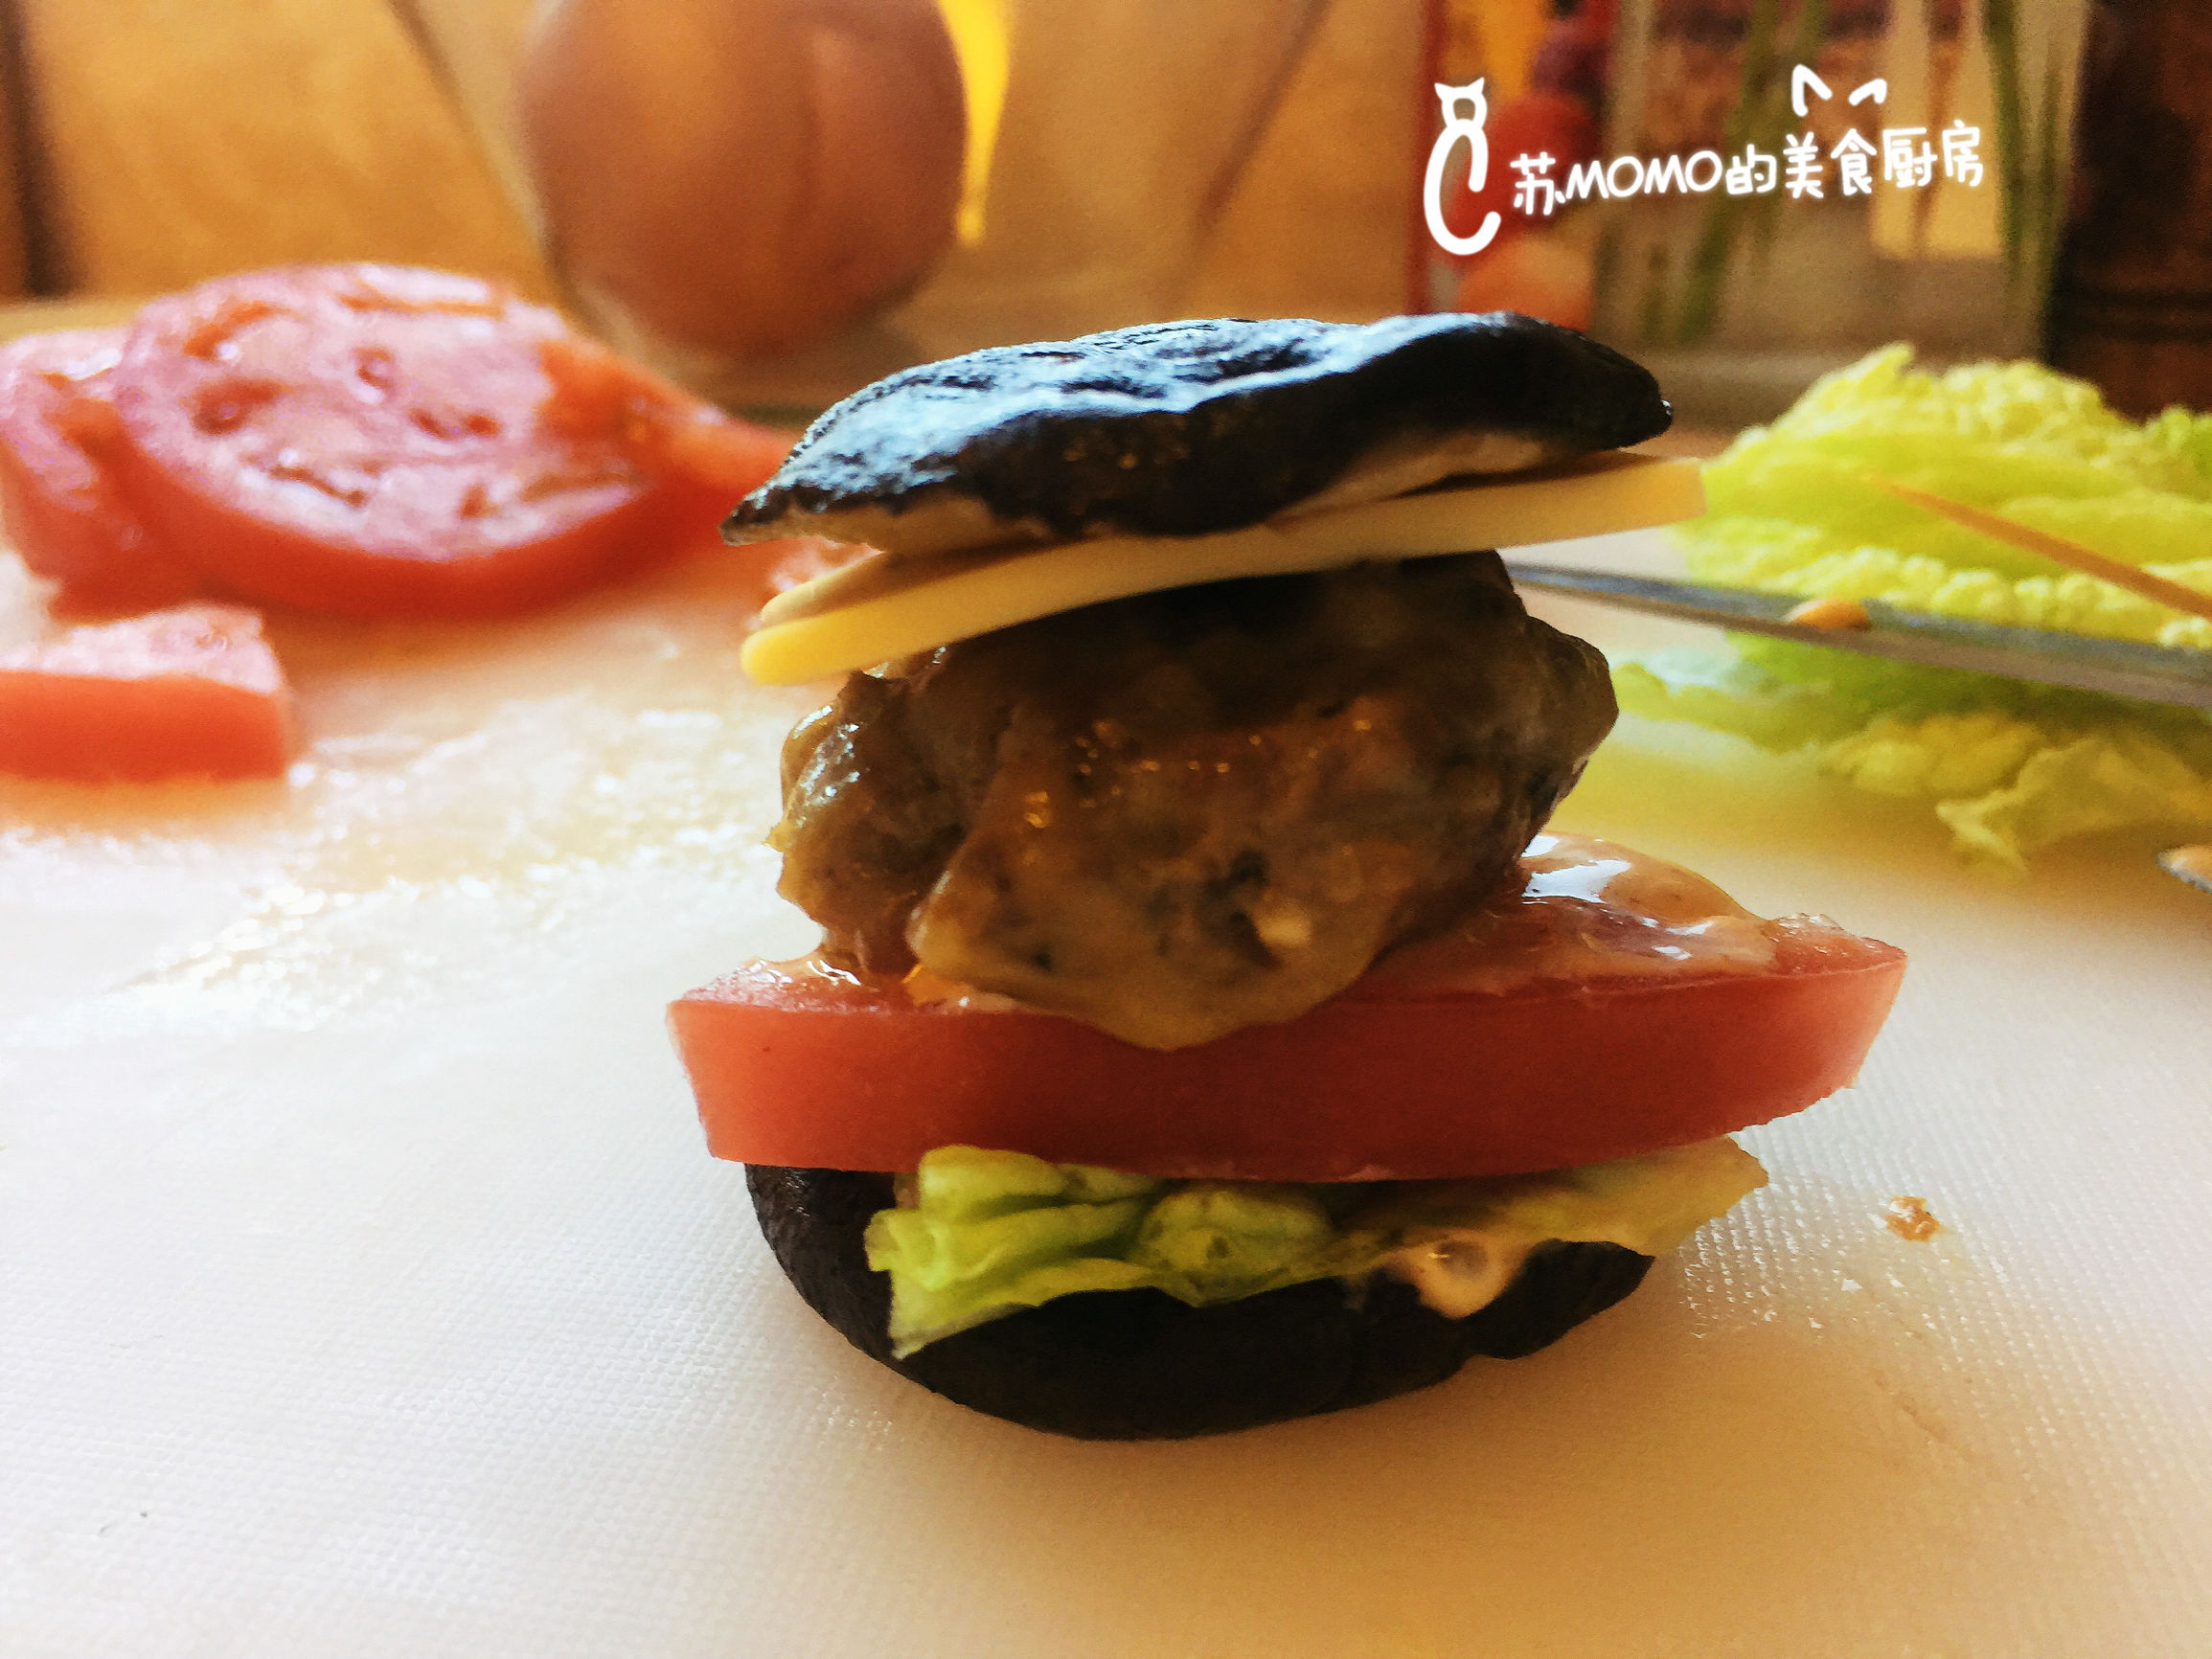 A hamburger, confuse fort of your Xianggu mushroom